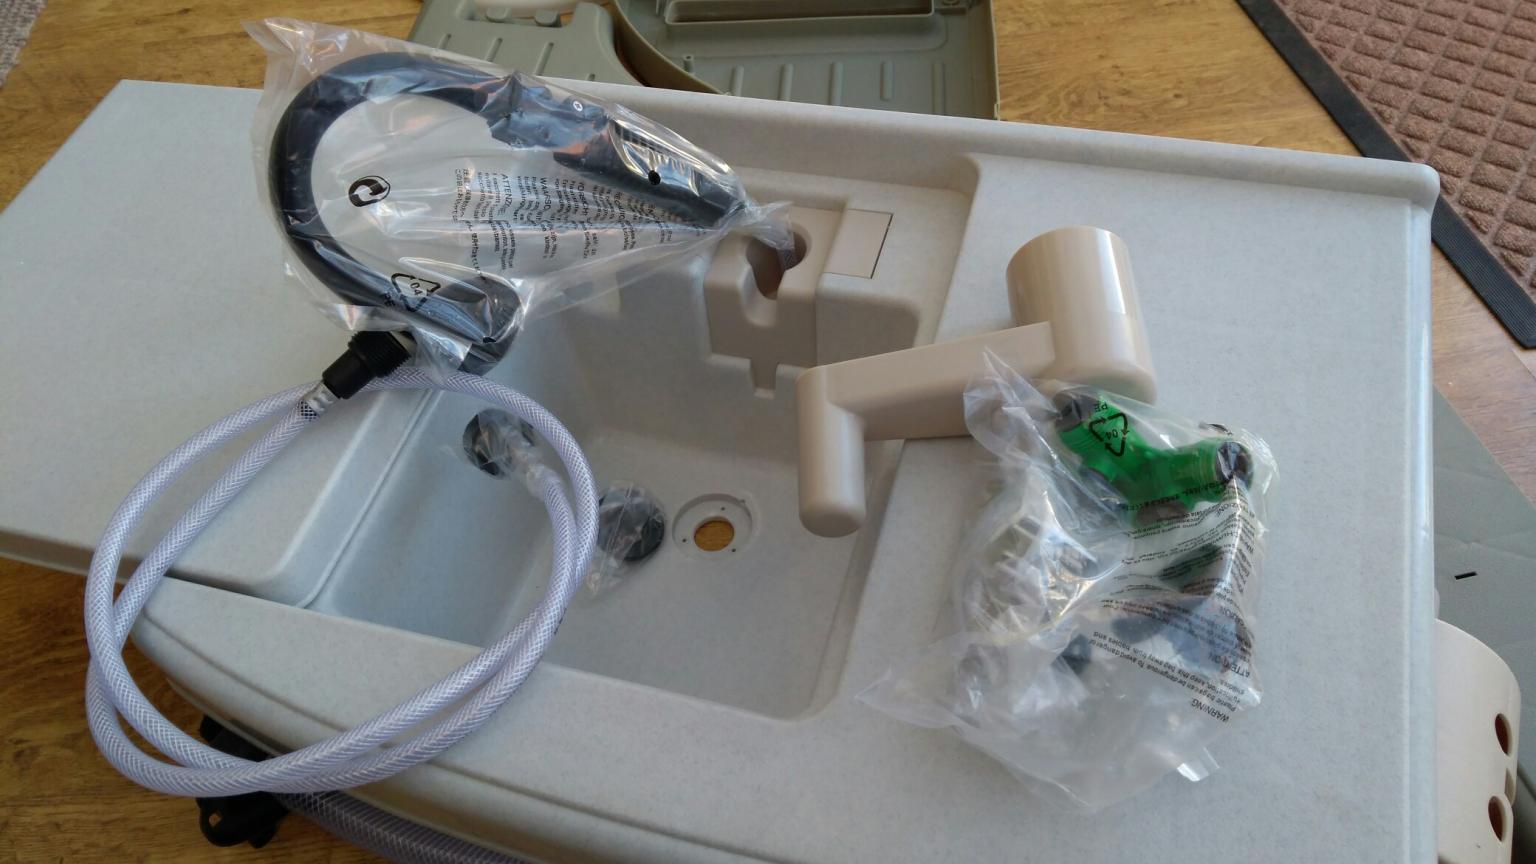 Backyard Gear Outdoor Sink With Hose Reel In Ne23 Cramlington For 20 00 For Sale Shpock